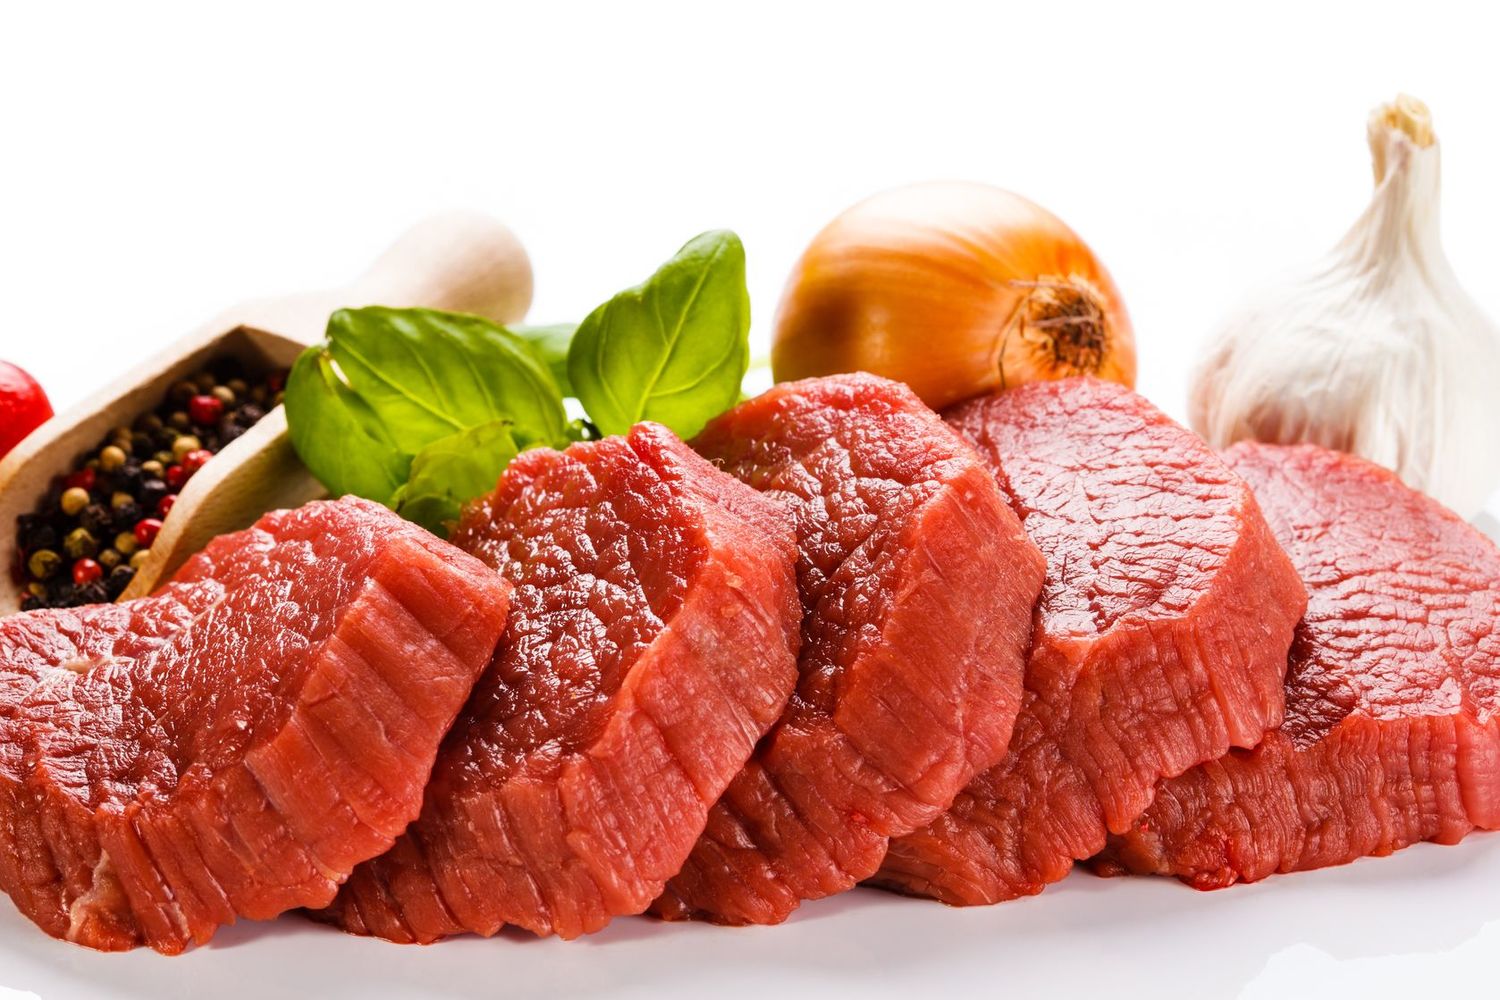 Red meat. Мясо. Мясо полуфабрикаты. Свежее мясо говядина. Мясо на белом фоне.